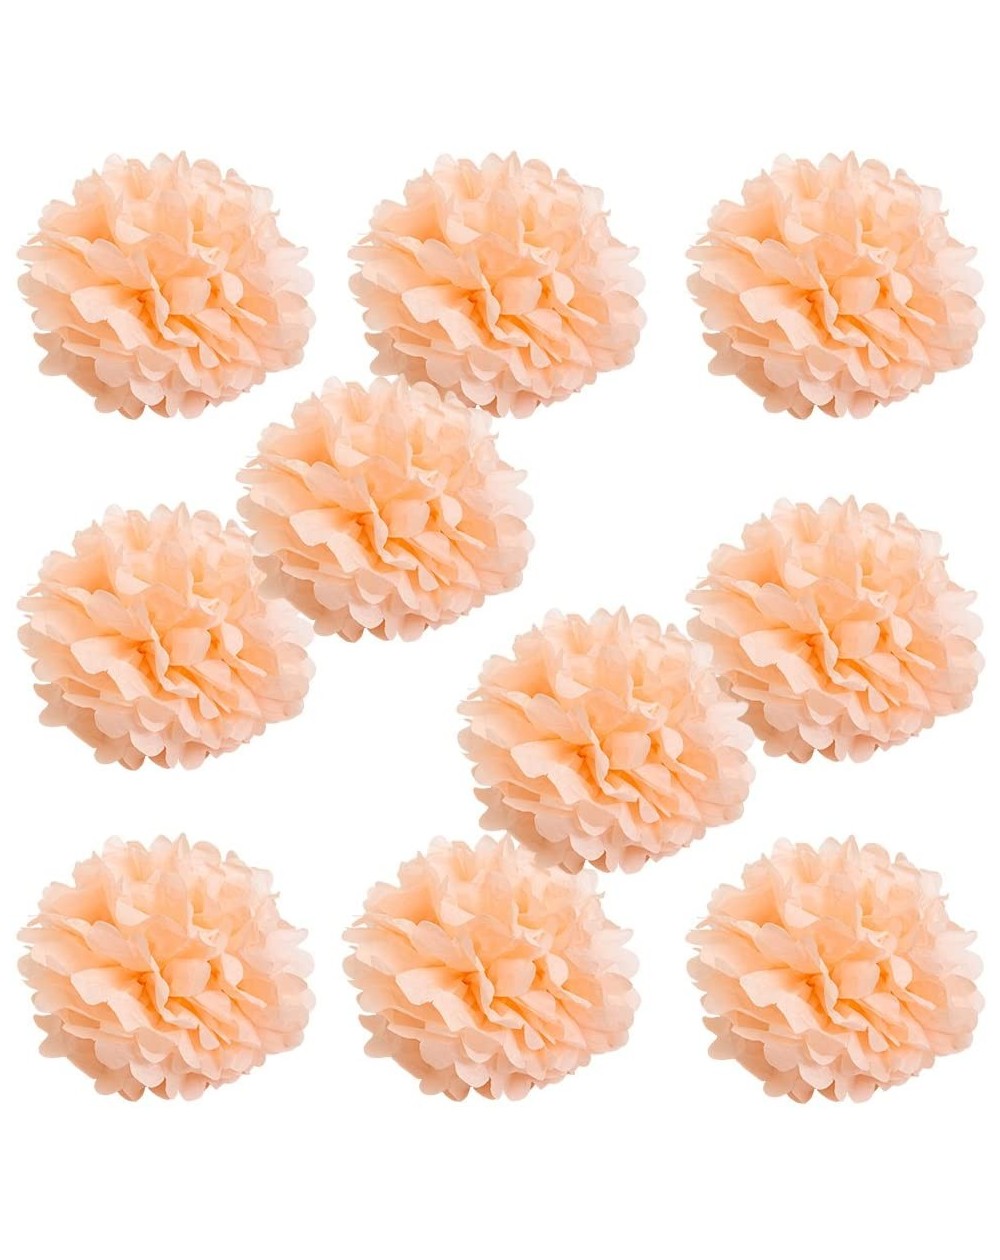 Tissue Pom Poms Set of 10 - Peach 8" - (10 Pack) Tissue Pom Poms Flower Party Decorations for Weddings- Birthday- Bridal- Bab...